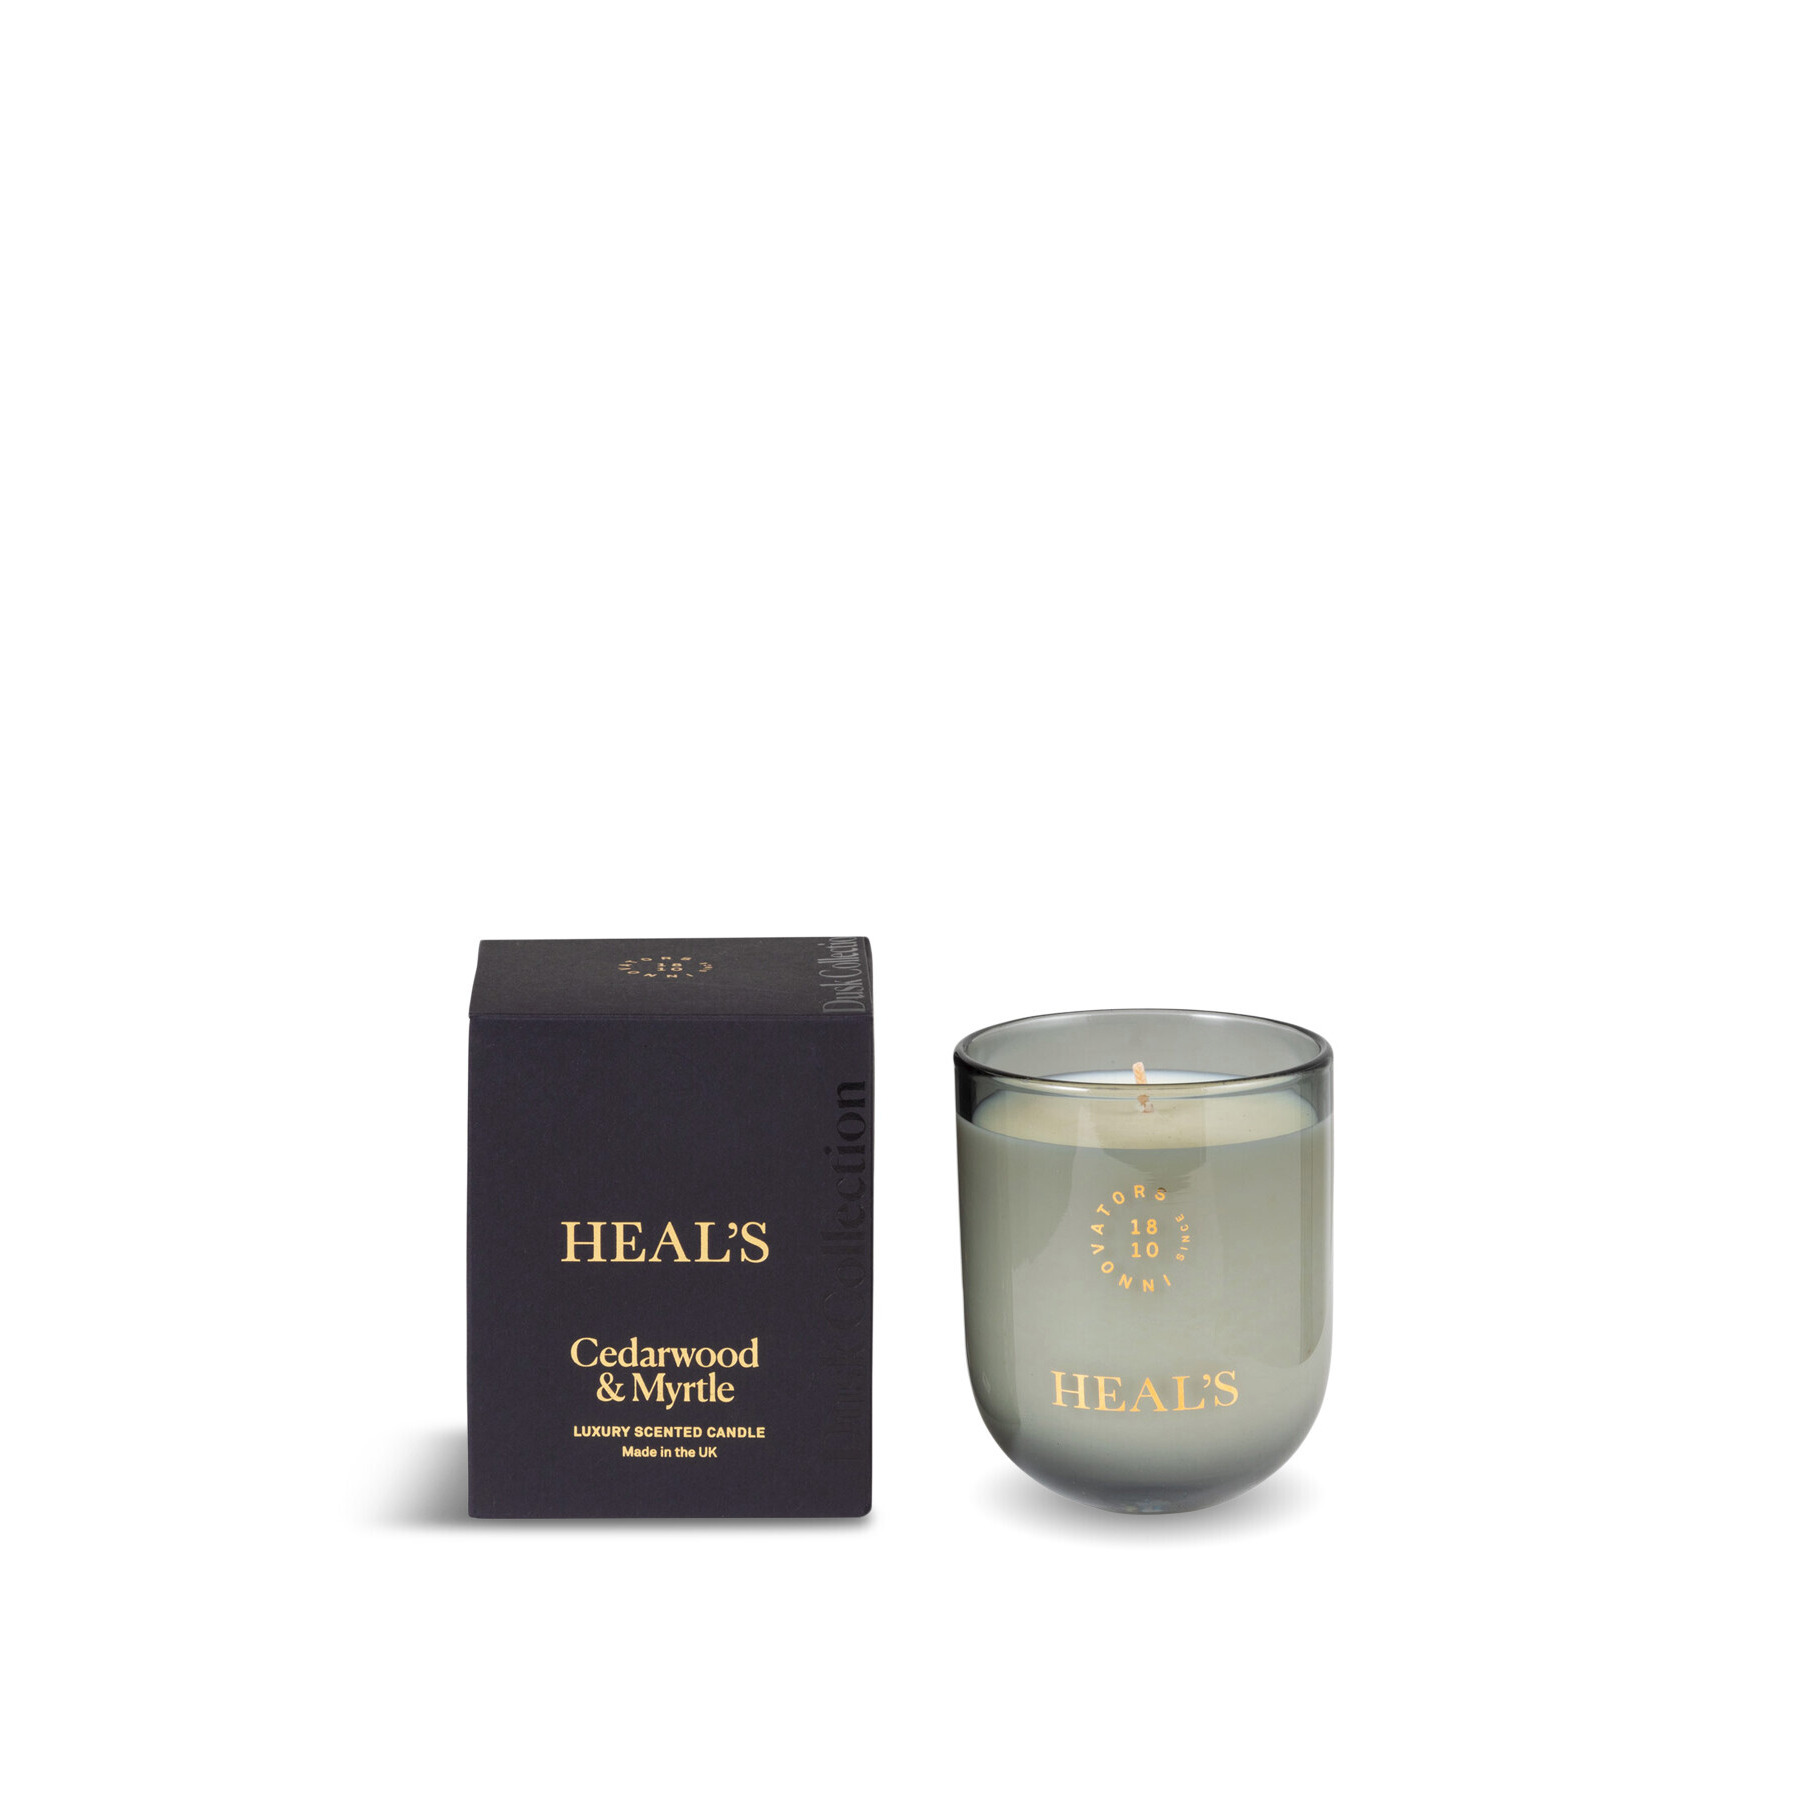 Heal's Dusk Cedarwood & Myrtle Candle Grey - image 1